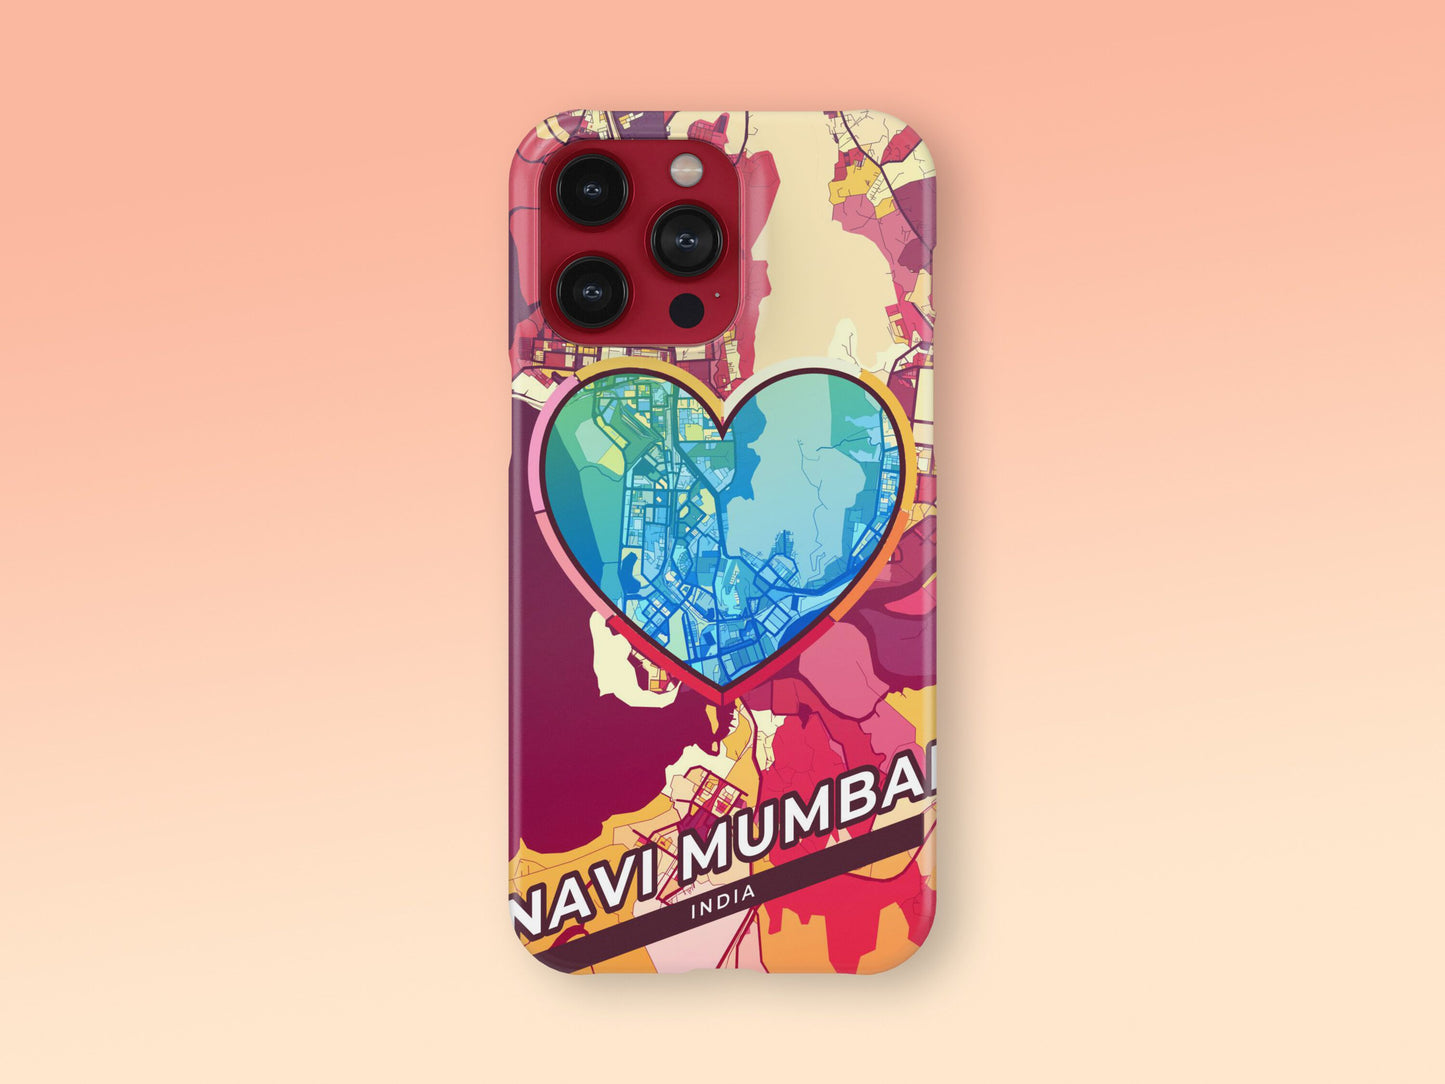 Navi Mumbai India slim phone case with colorful icon 2